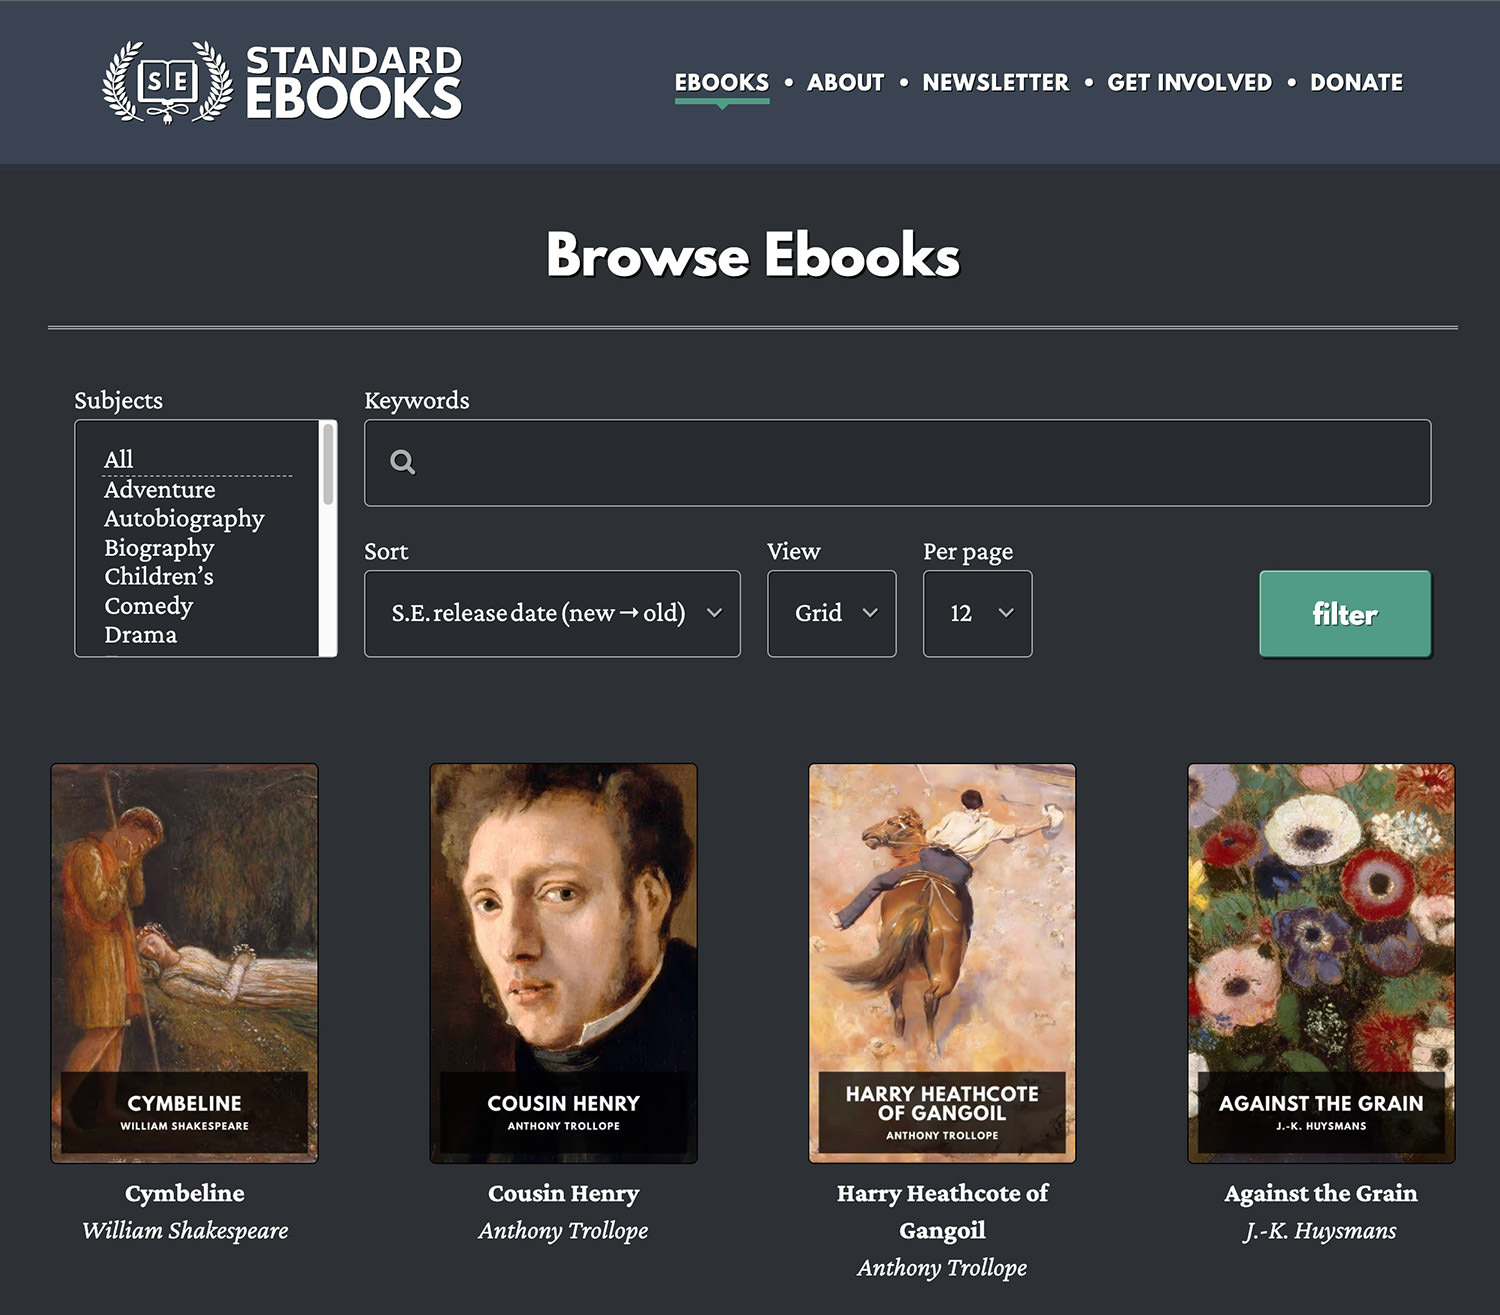 Image of Standard Ebooks website